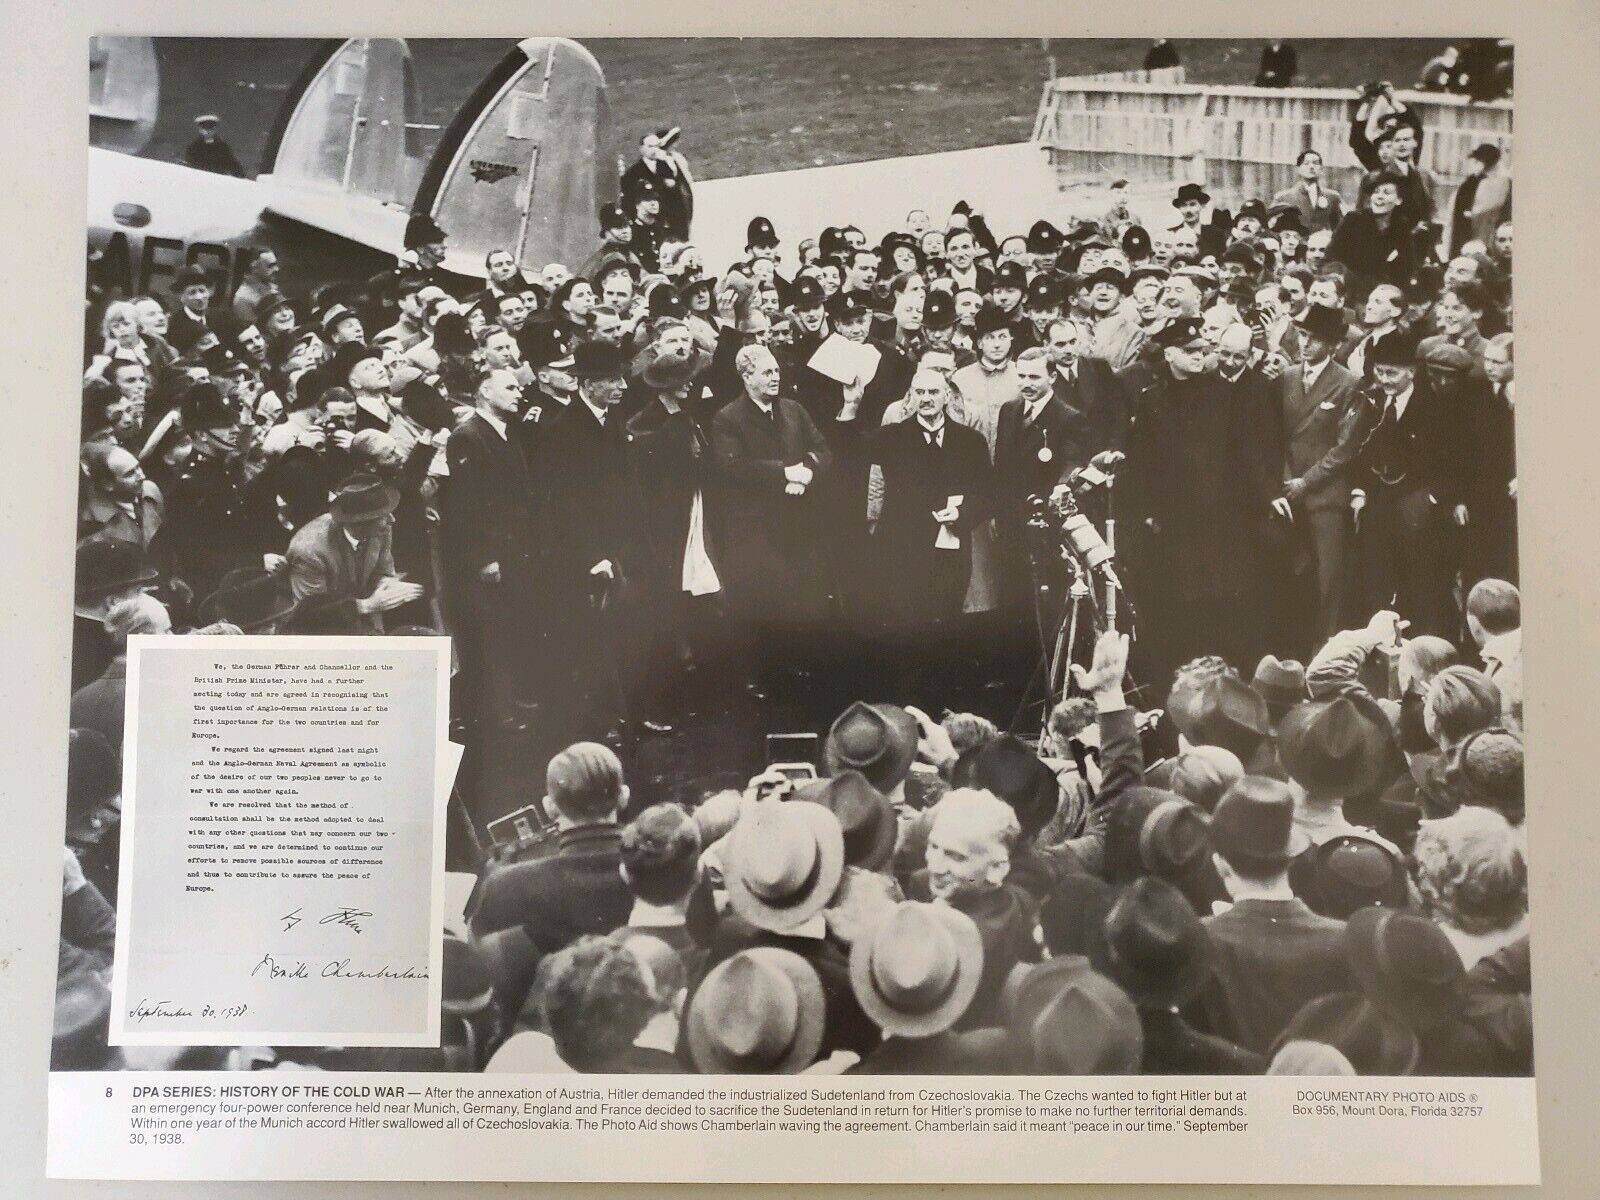 11X14 PHOTO THE COLD WAR CHAMBERLAIN WAVING THE MUNICH AGREEMENT SEPT. 30, 1938